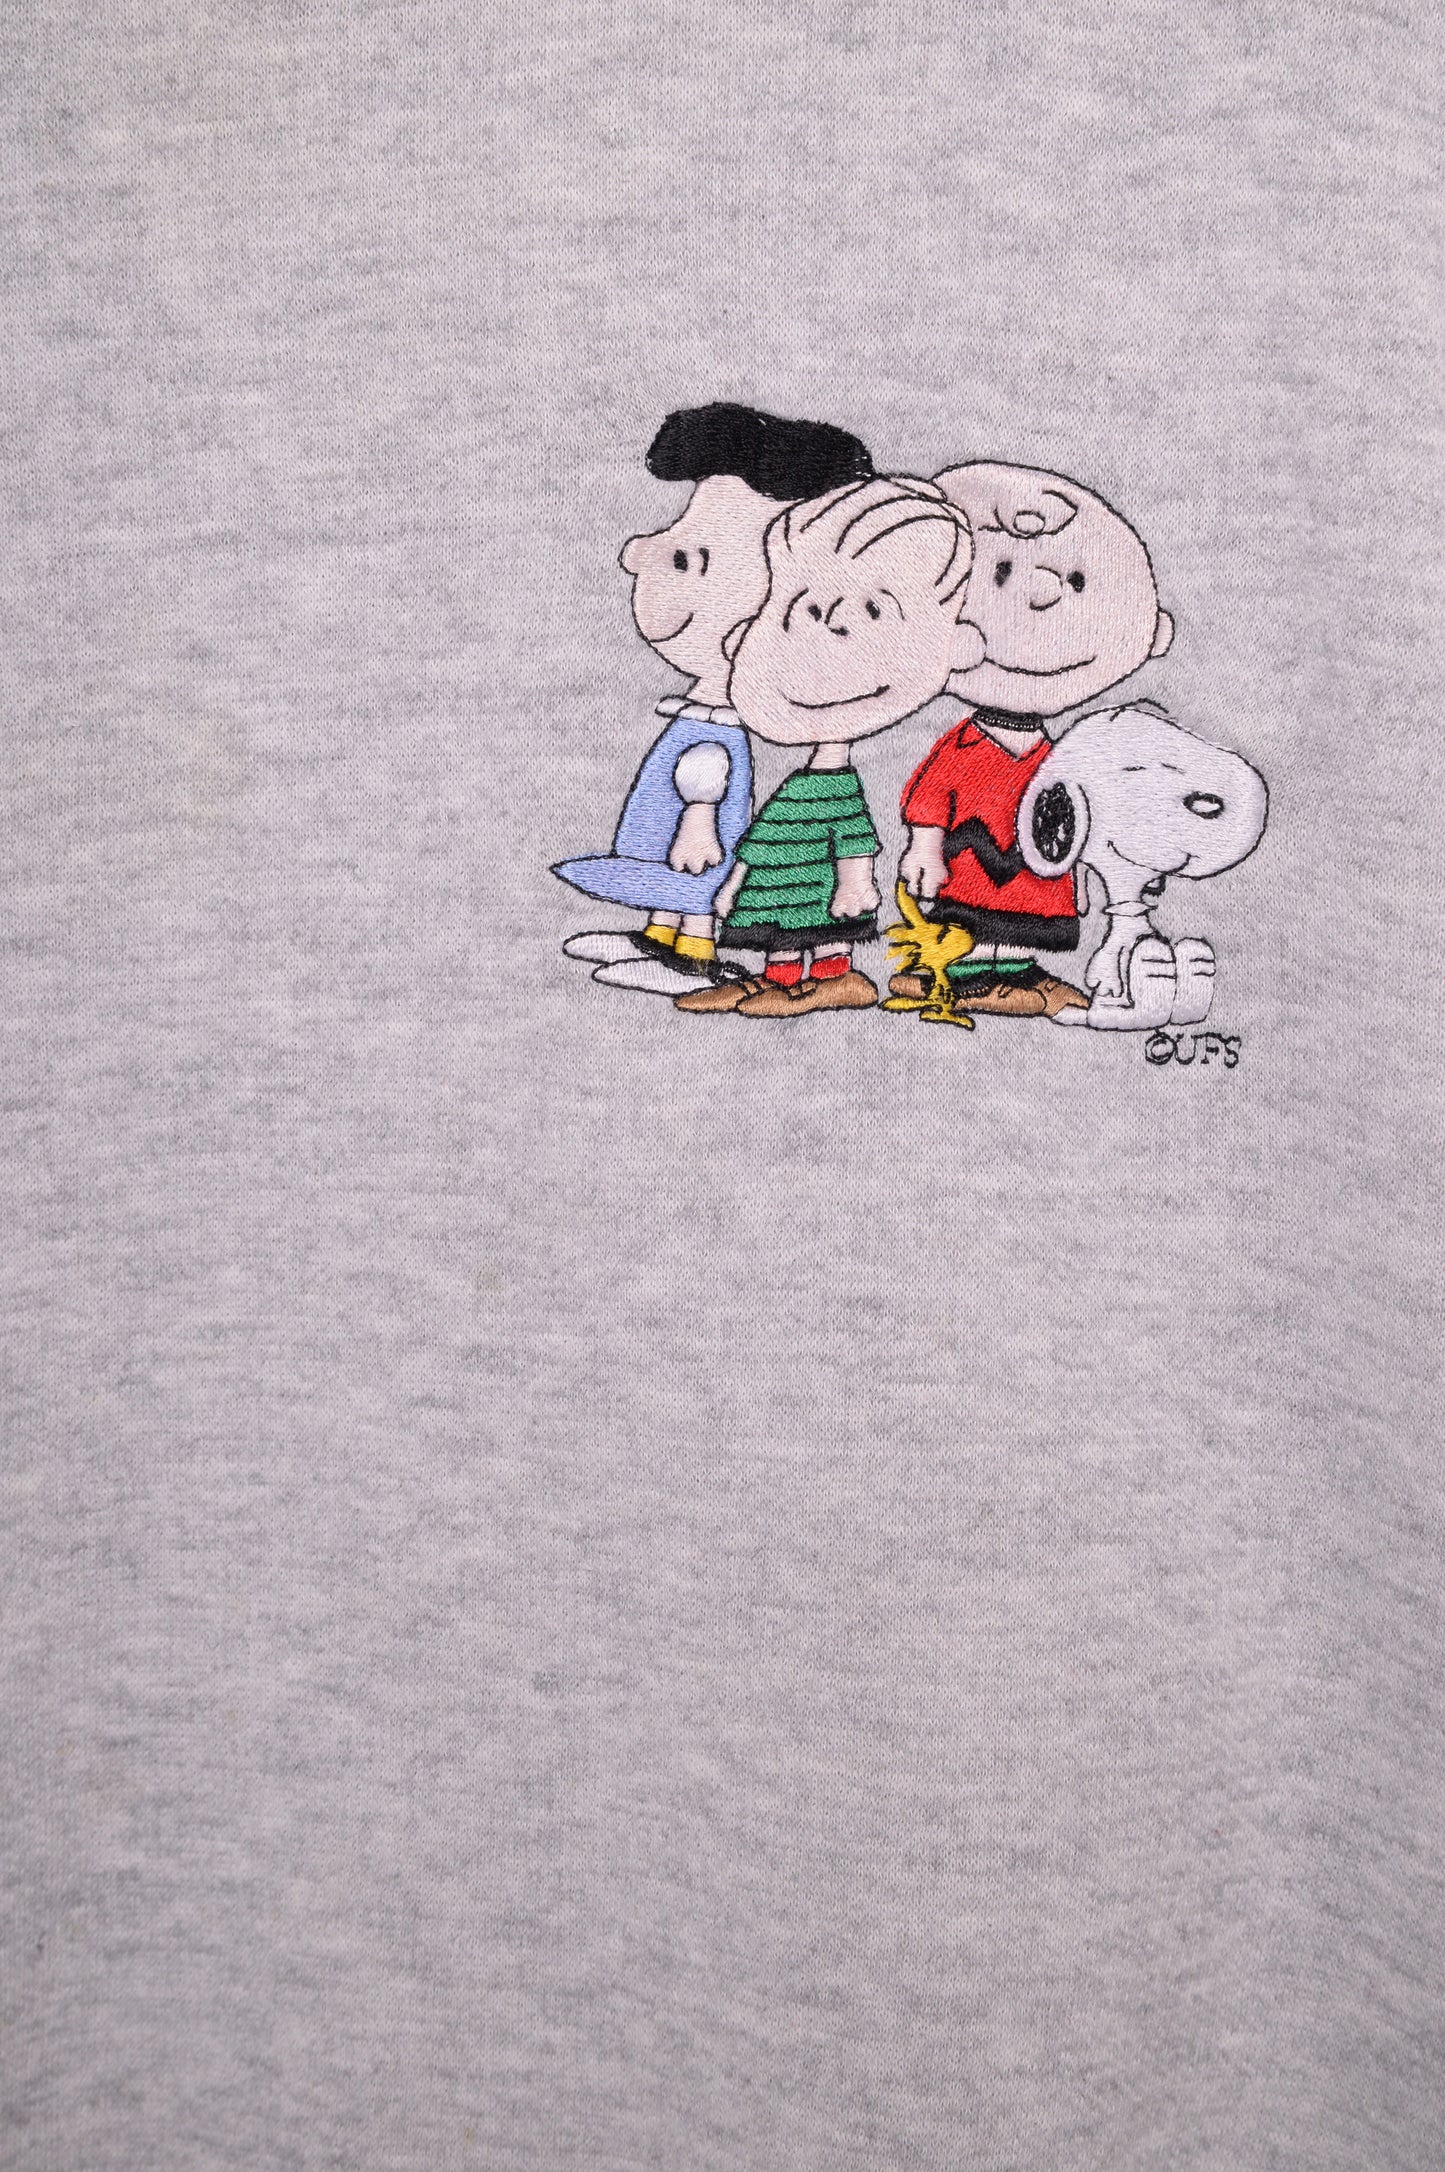 Peanuts Sweatshirt